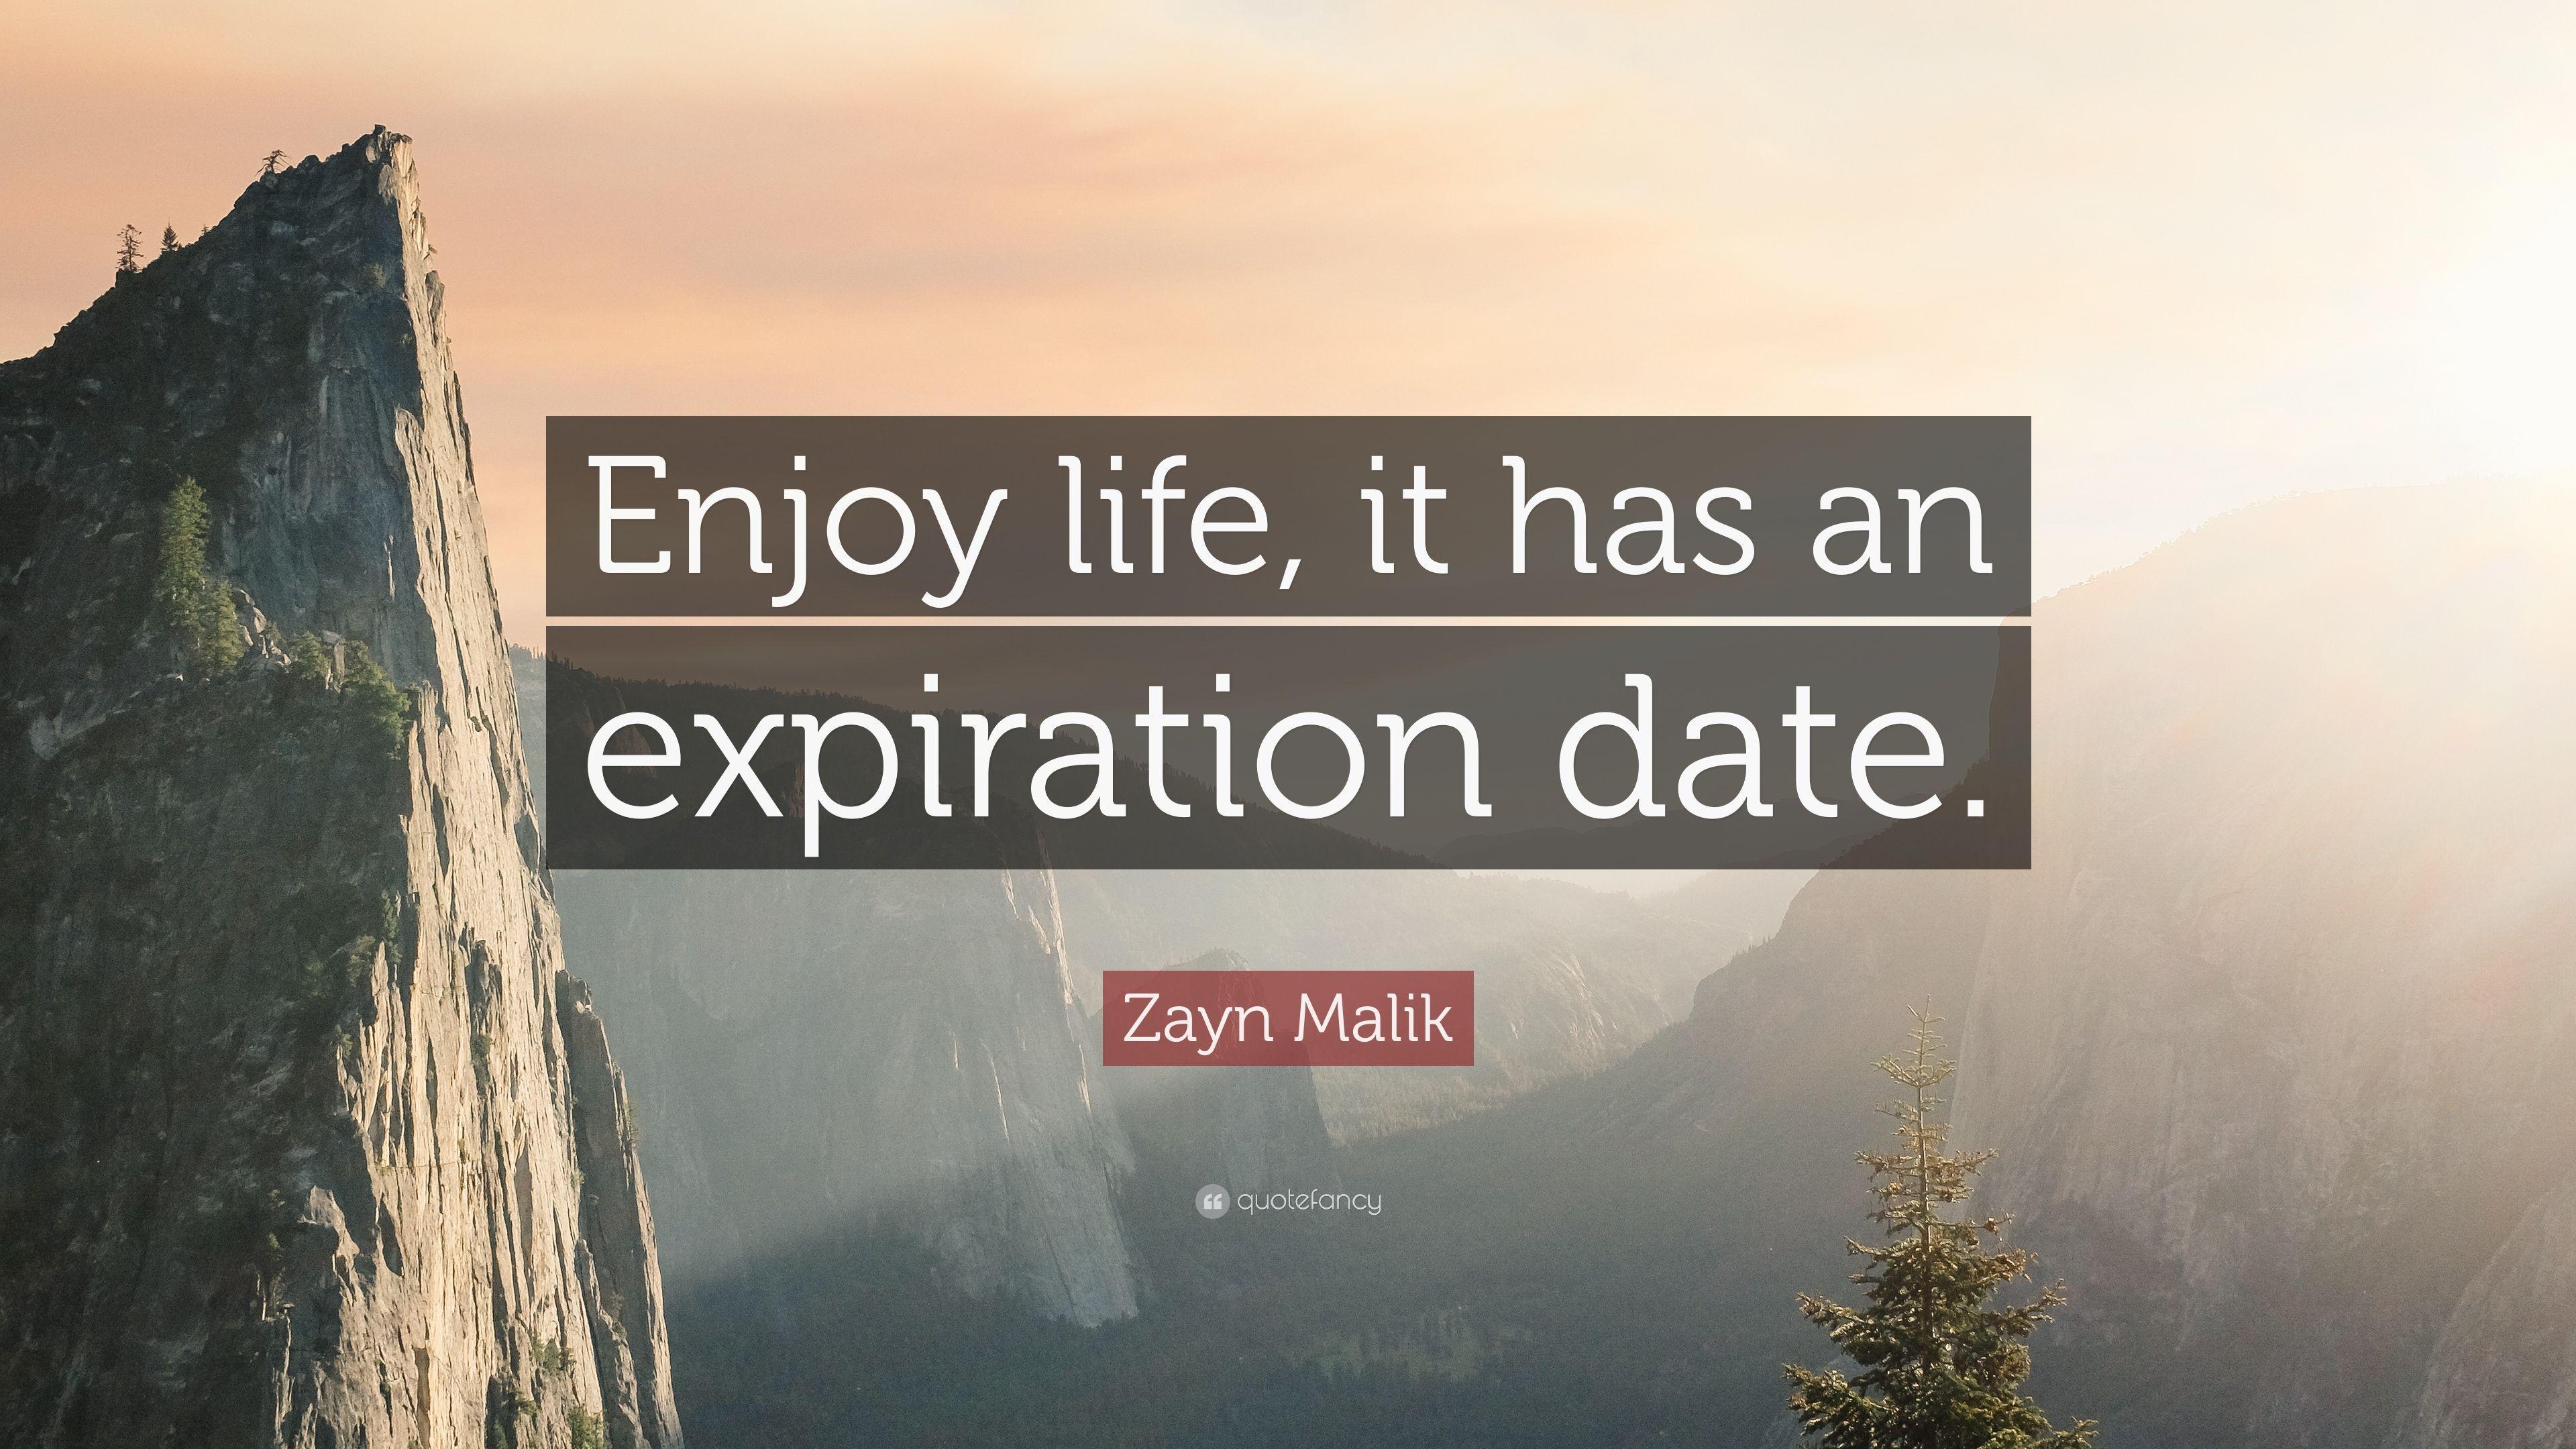 Zayn Malik Quote: “Enjoy life, it has an expiration date.” 10